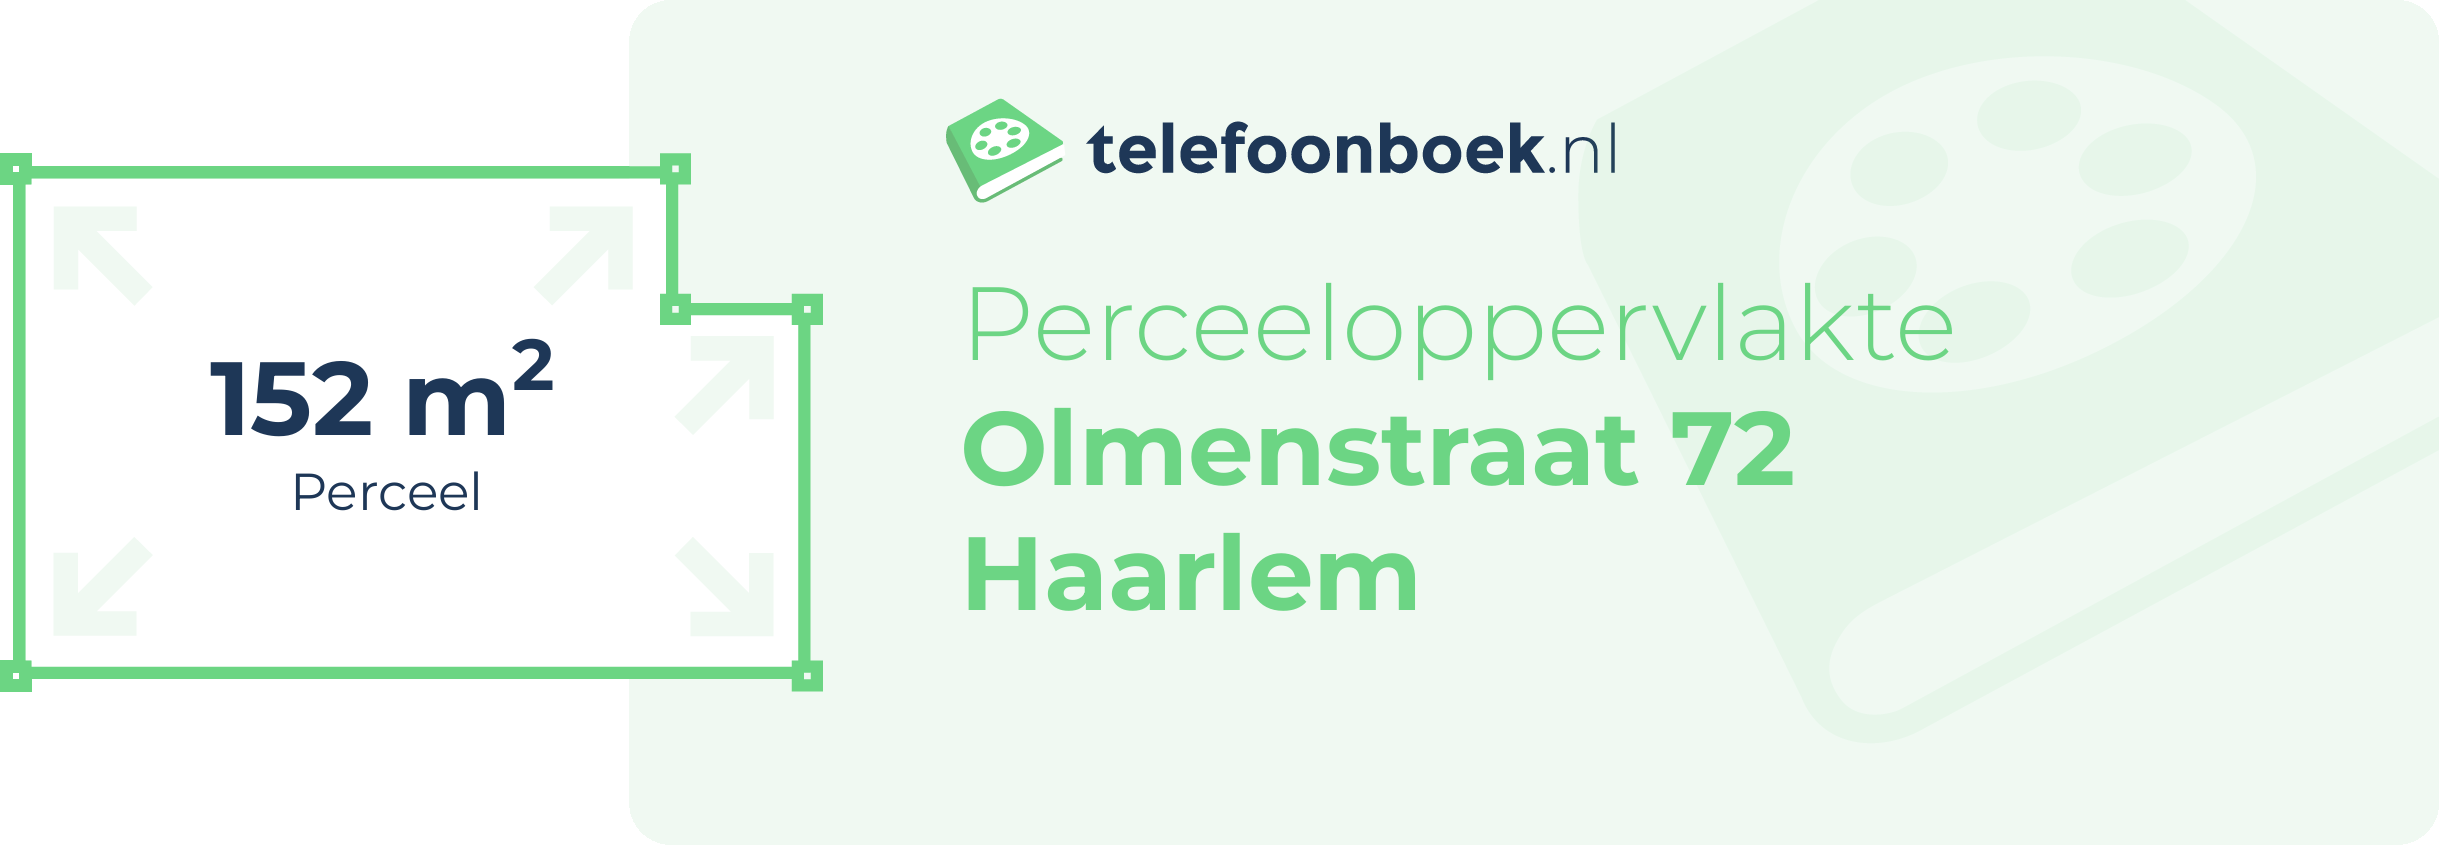 Perceeloppervlakte Olmenstraat 72 Haarlem